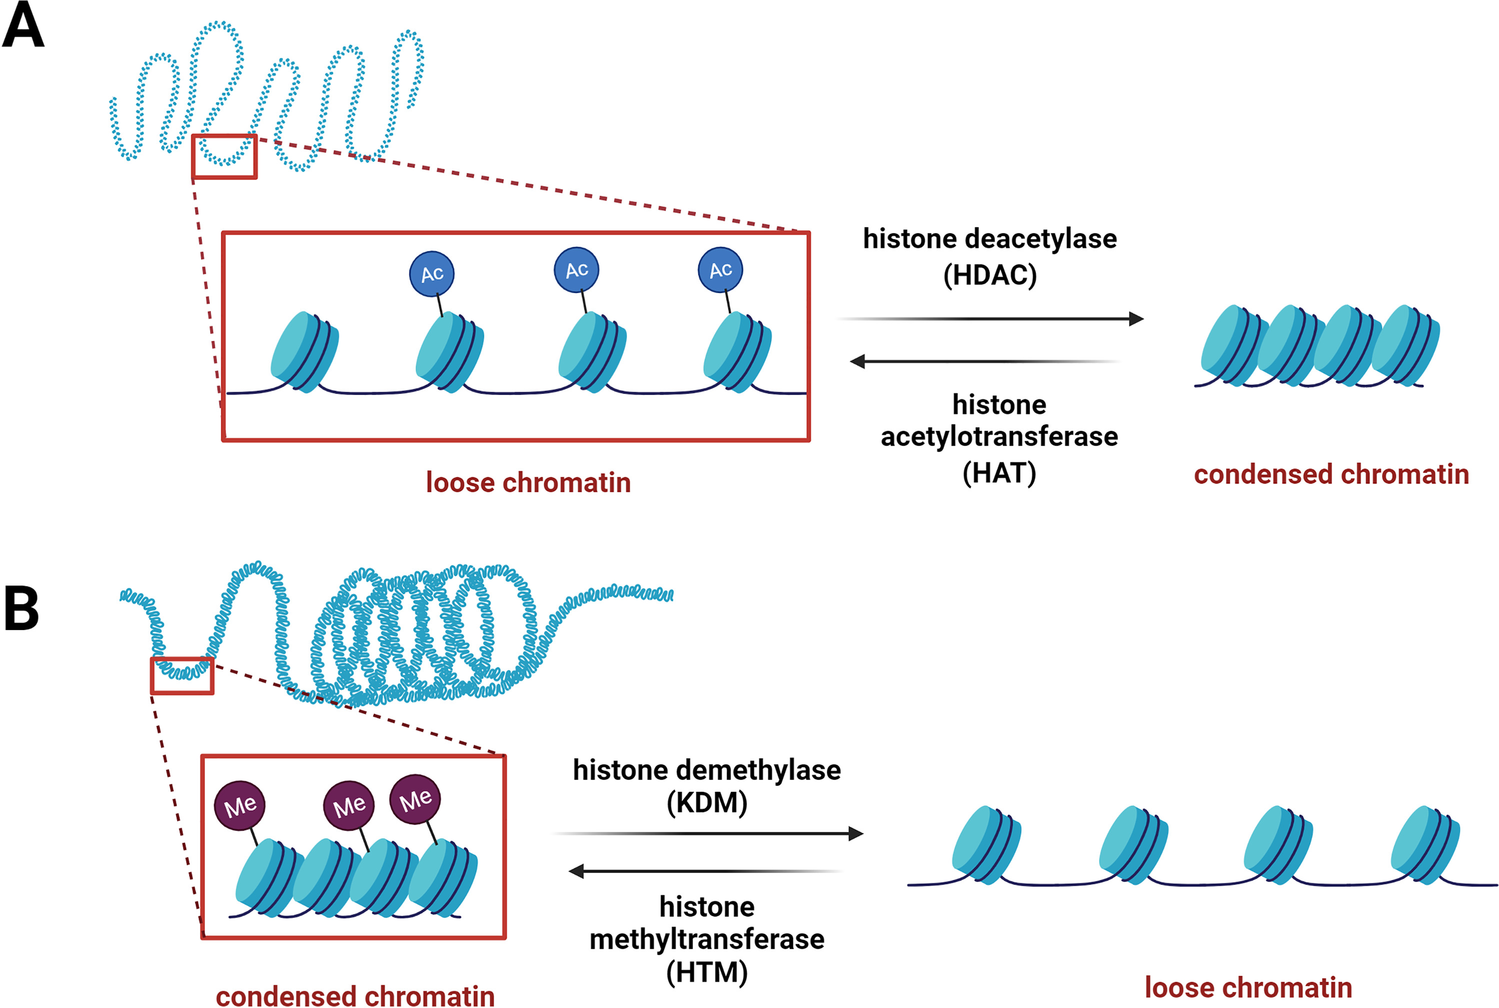 Cardiovascular Mechano-Epigenetics: Force-Dependent Regulation of Histone Modifications and Gene Regulation